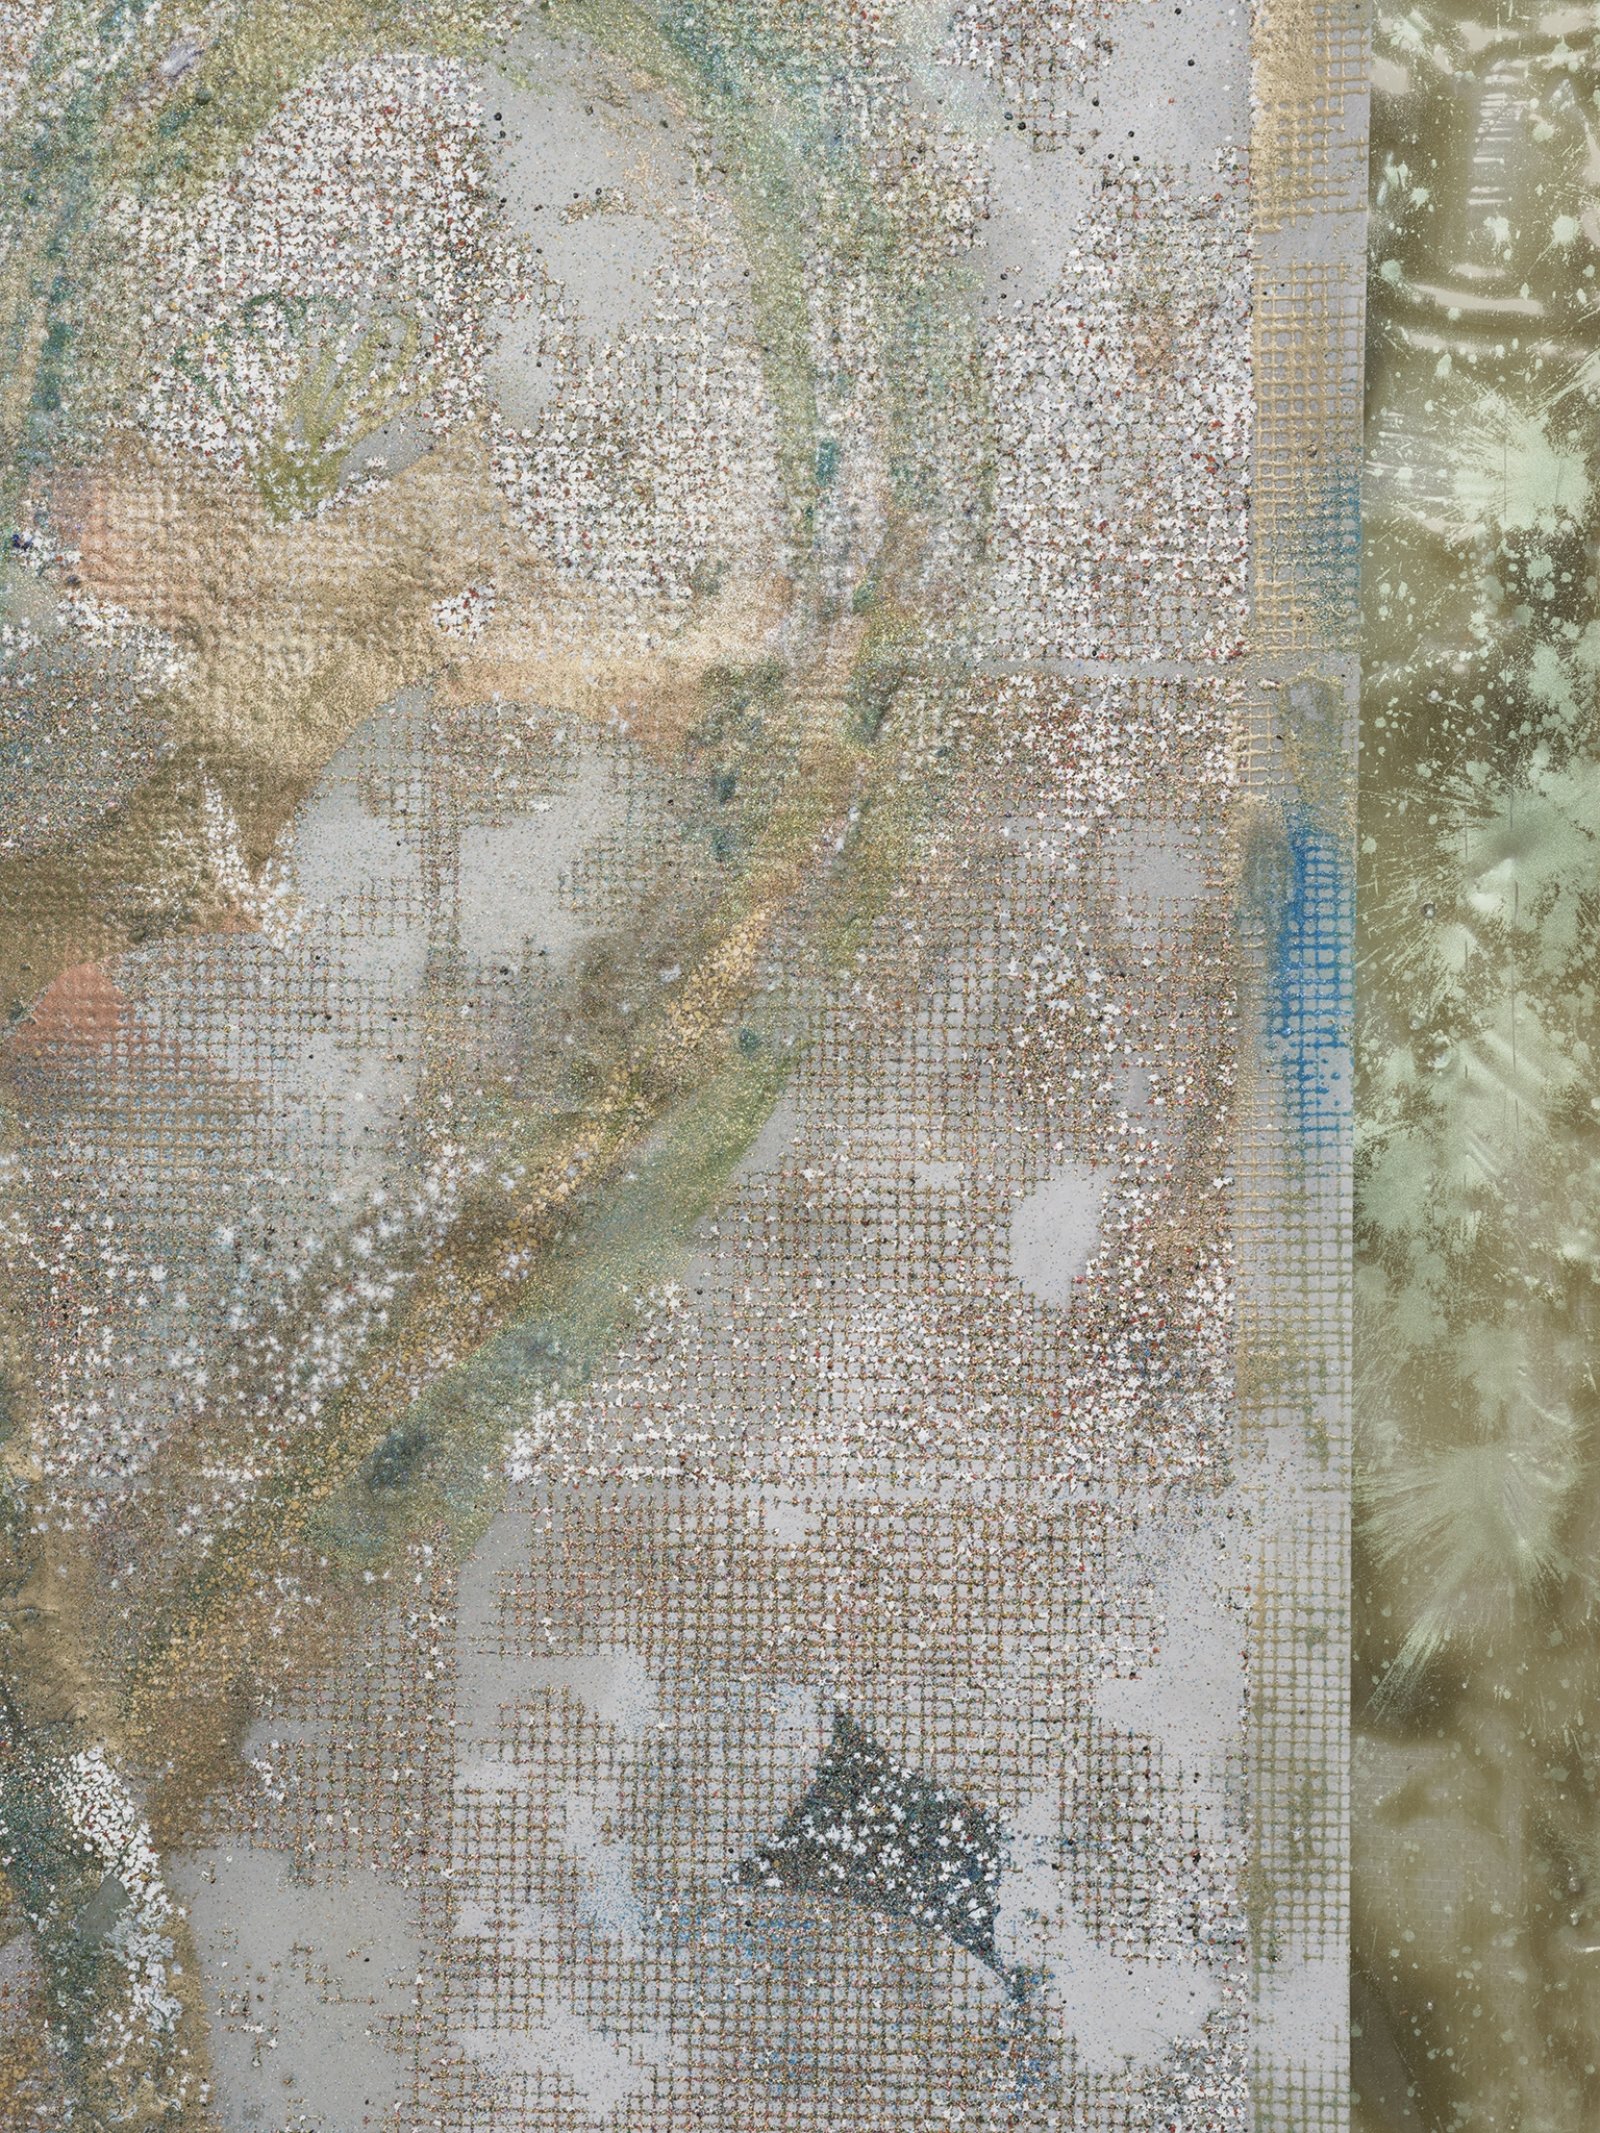 Rebecca Brewer, Live Resin: Twin Flame (detail), 2019, urethane resin, aluminum mesh, pigment, plexiglas, embossing powder on vellum, 41 x 29 in. (104 x 74 cm)